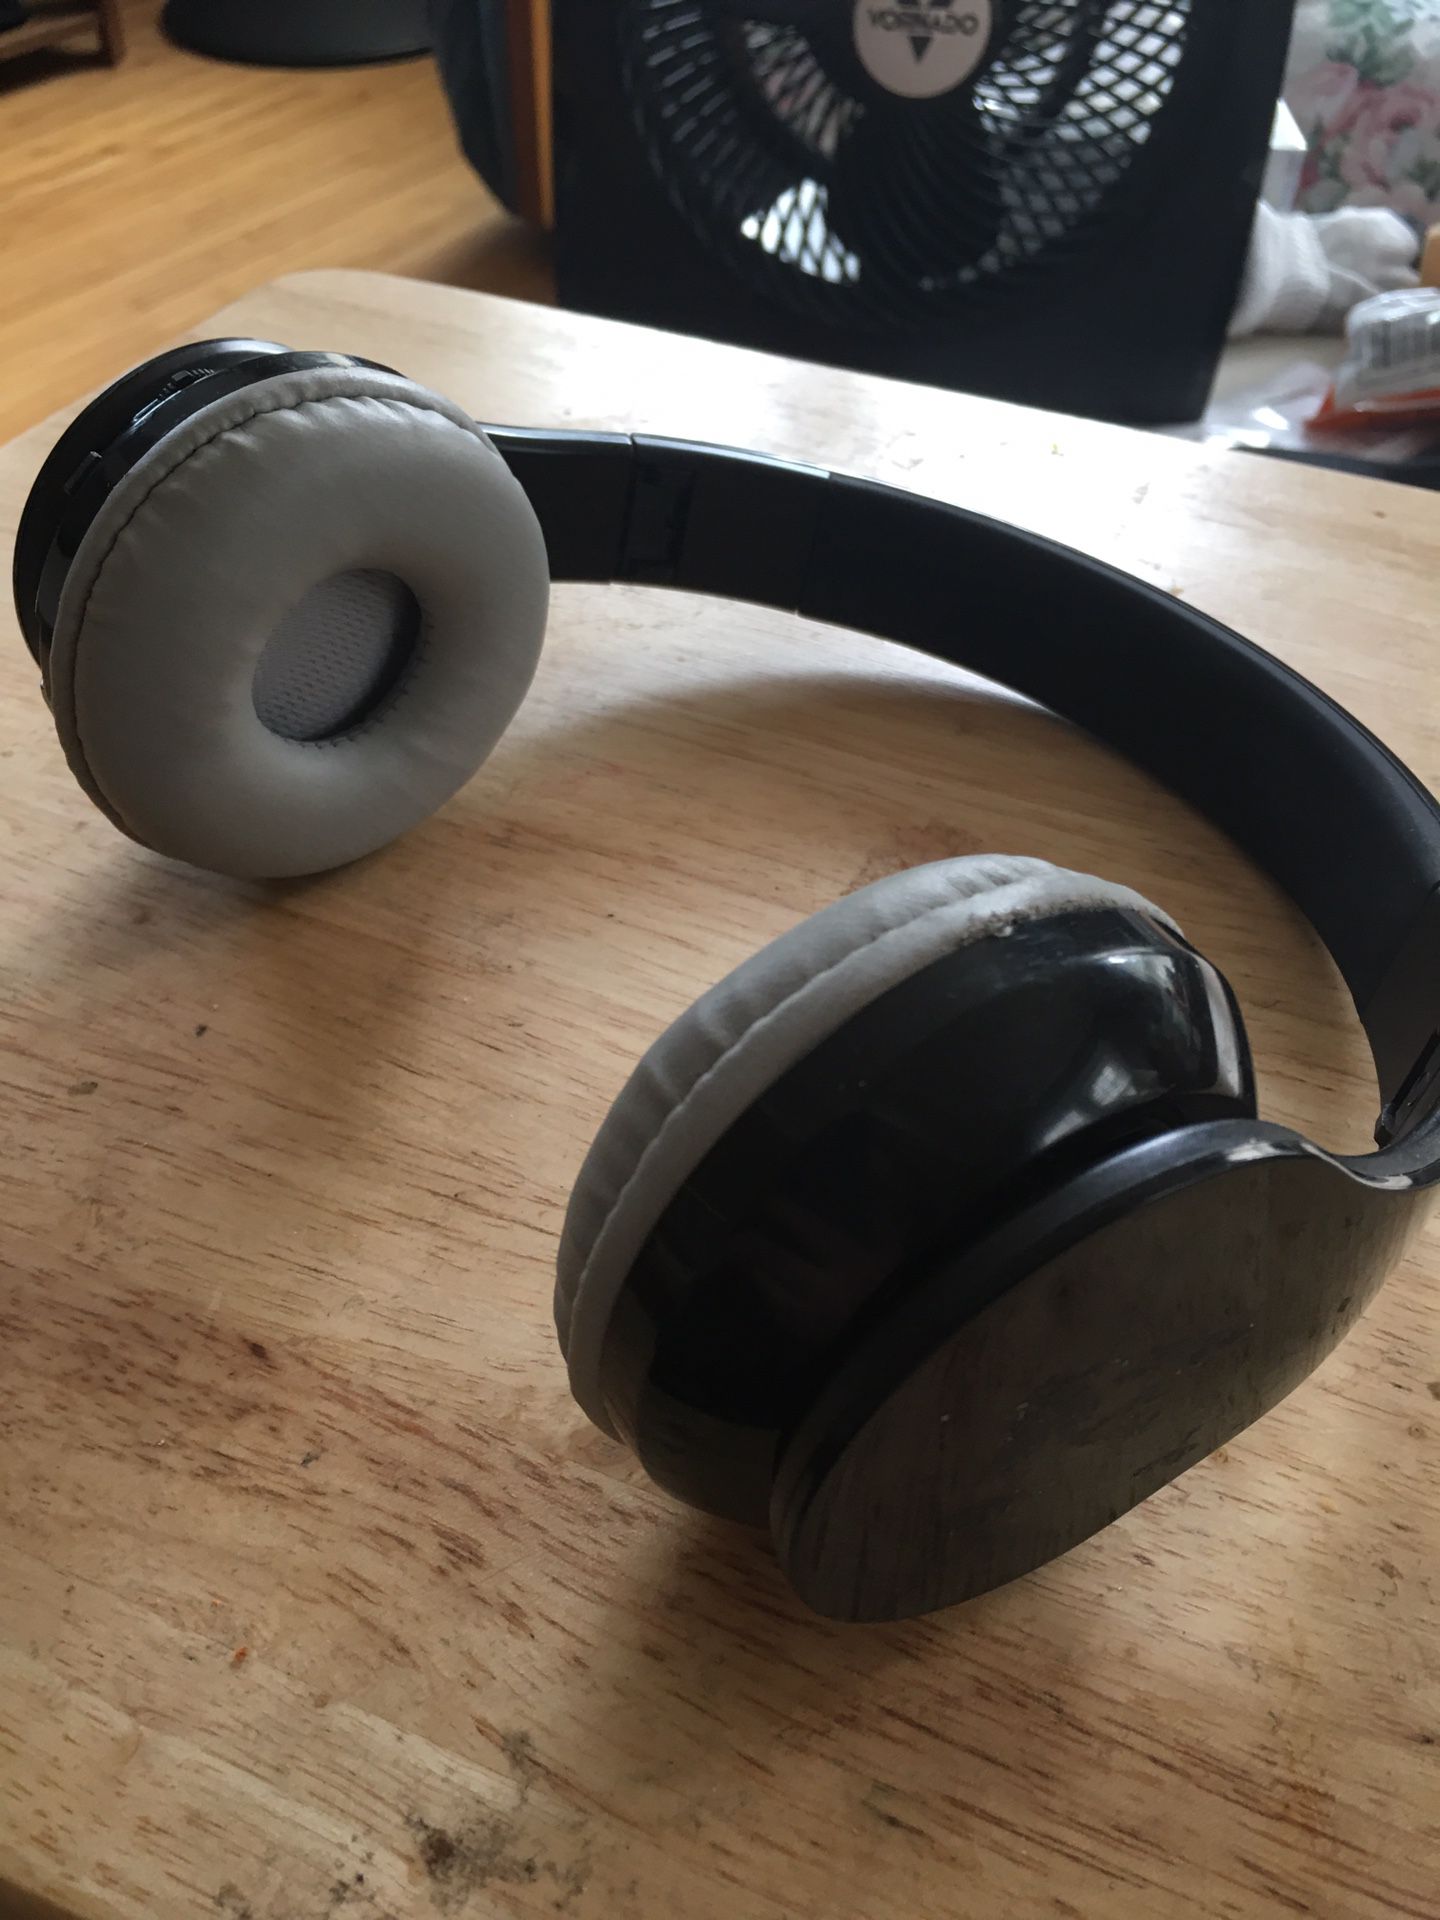 black/grey bluetooth headphones